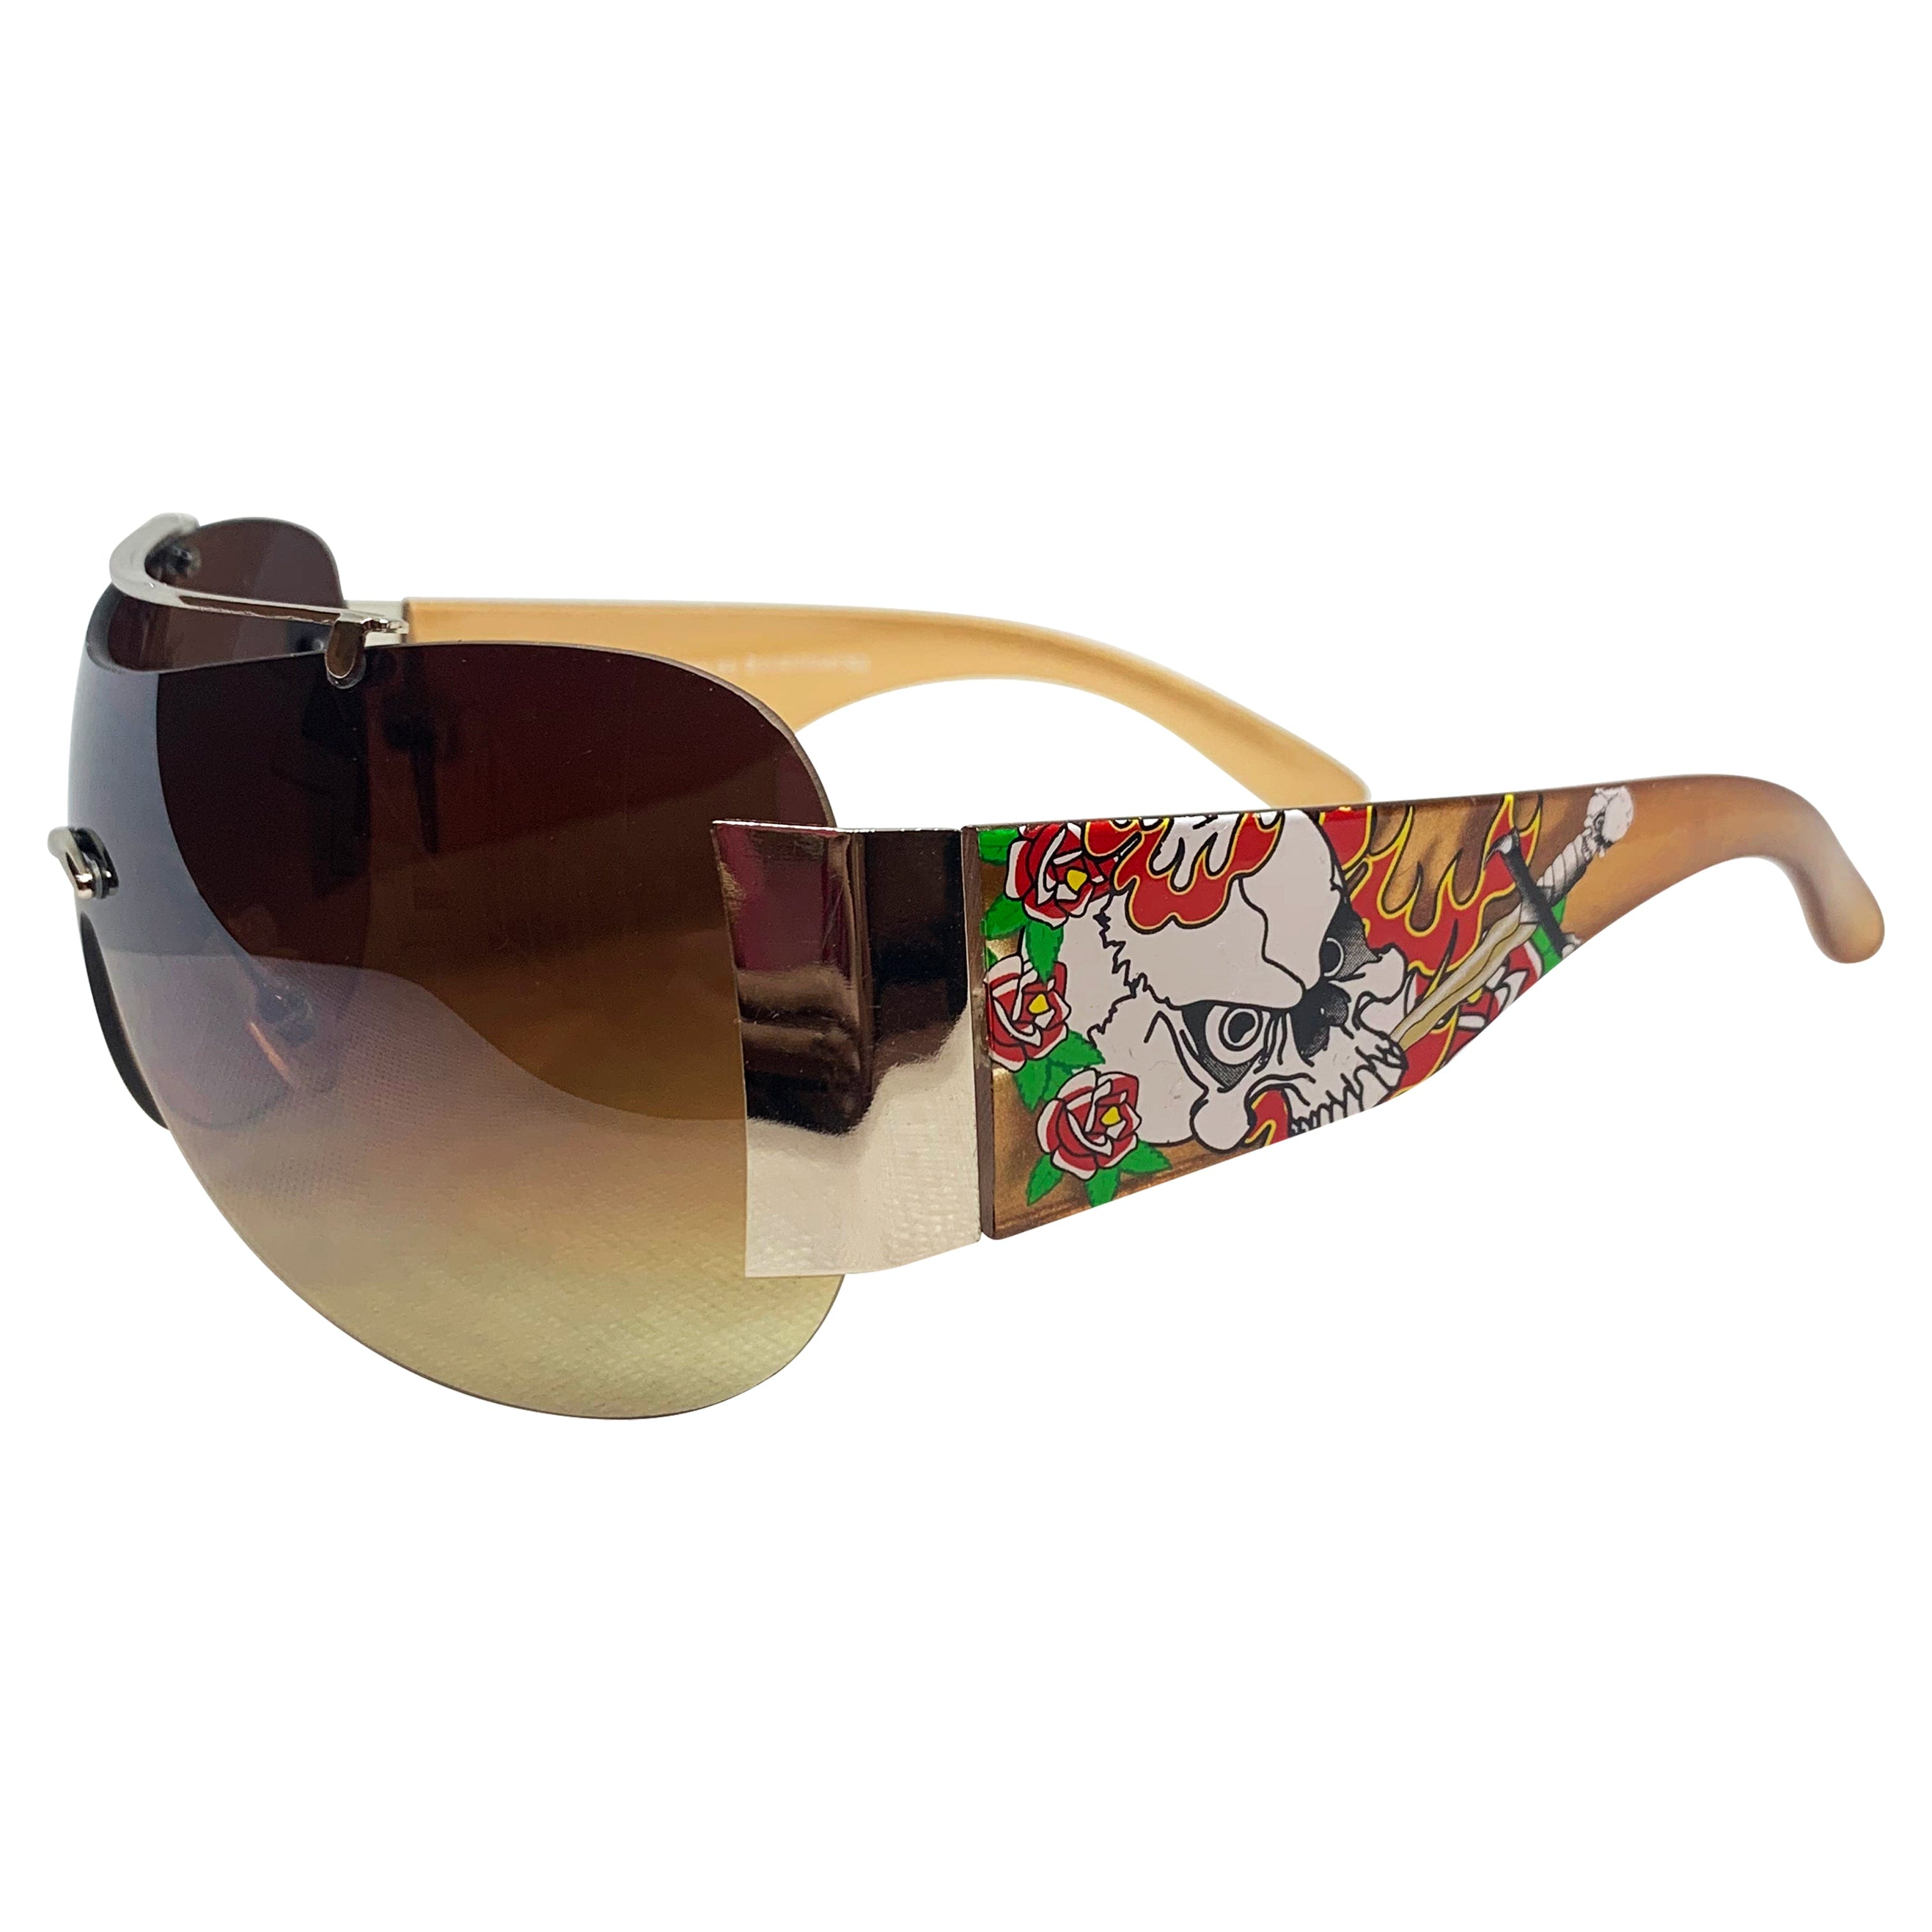 EDDY Y2K Tattoo Art Shield Sunglasses: Gold/Amber Flame Skull